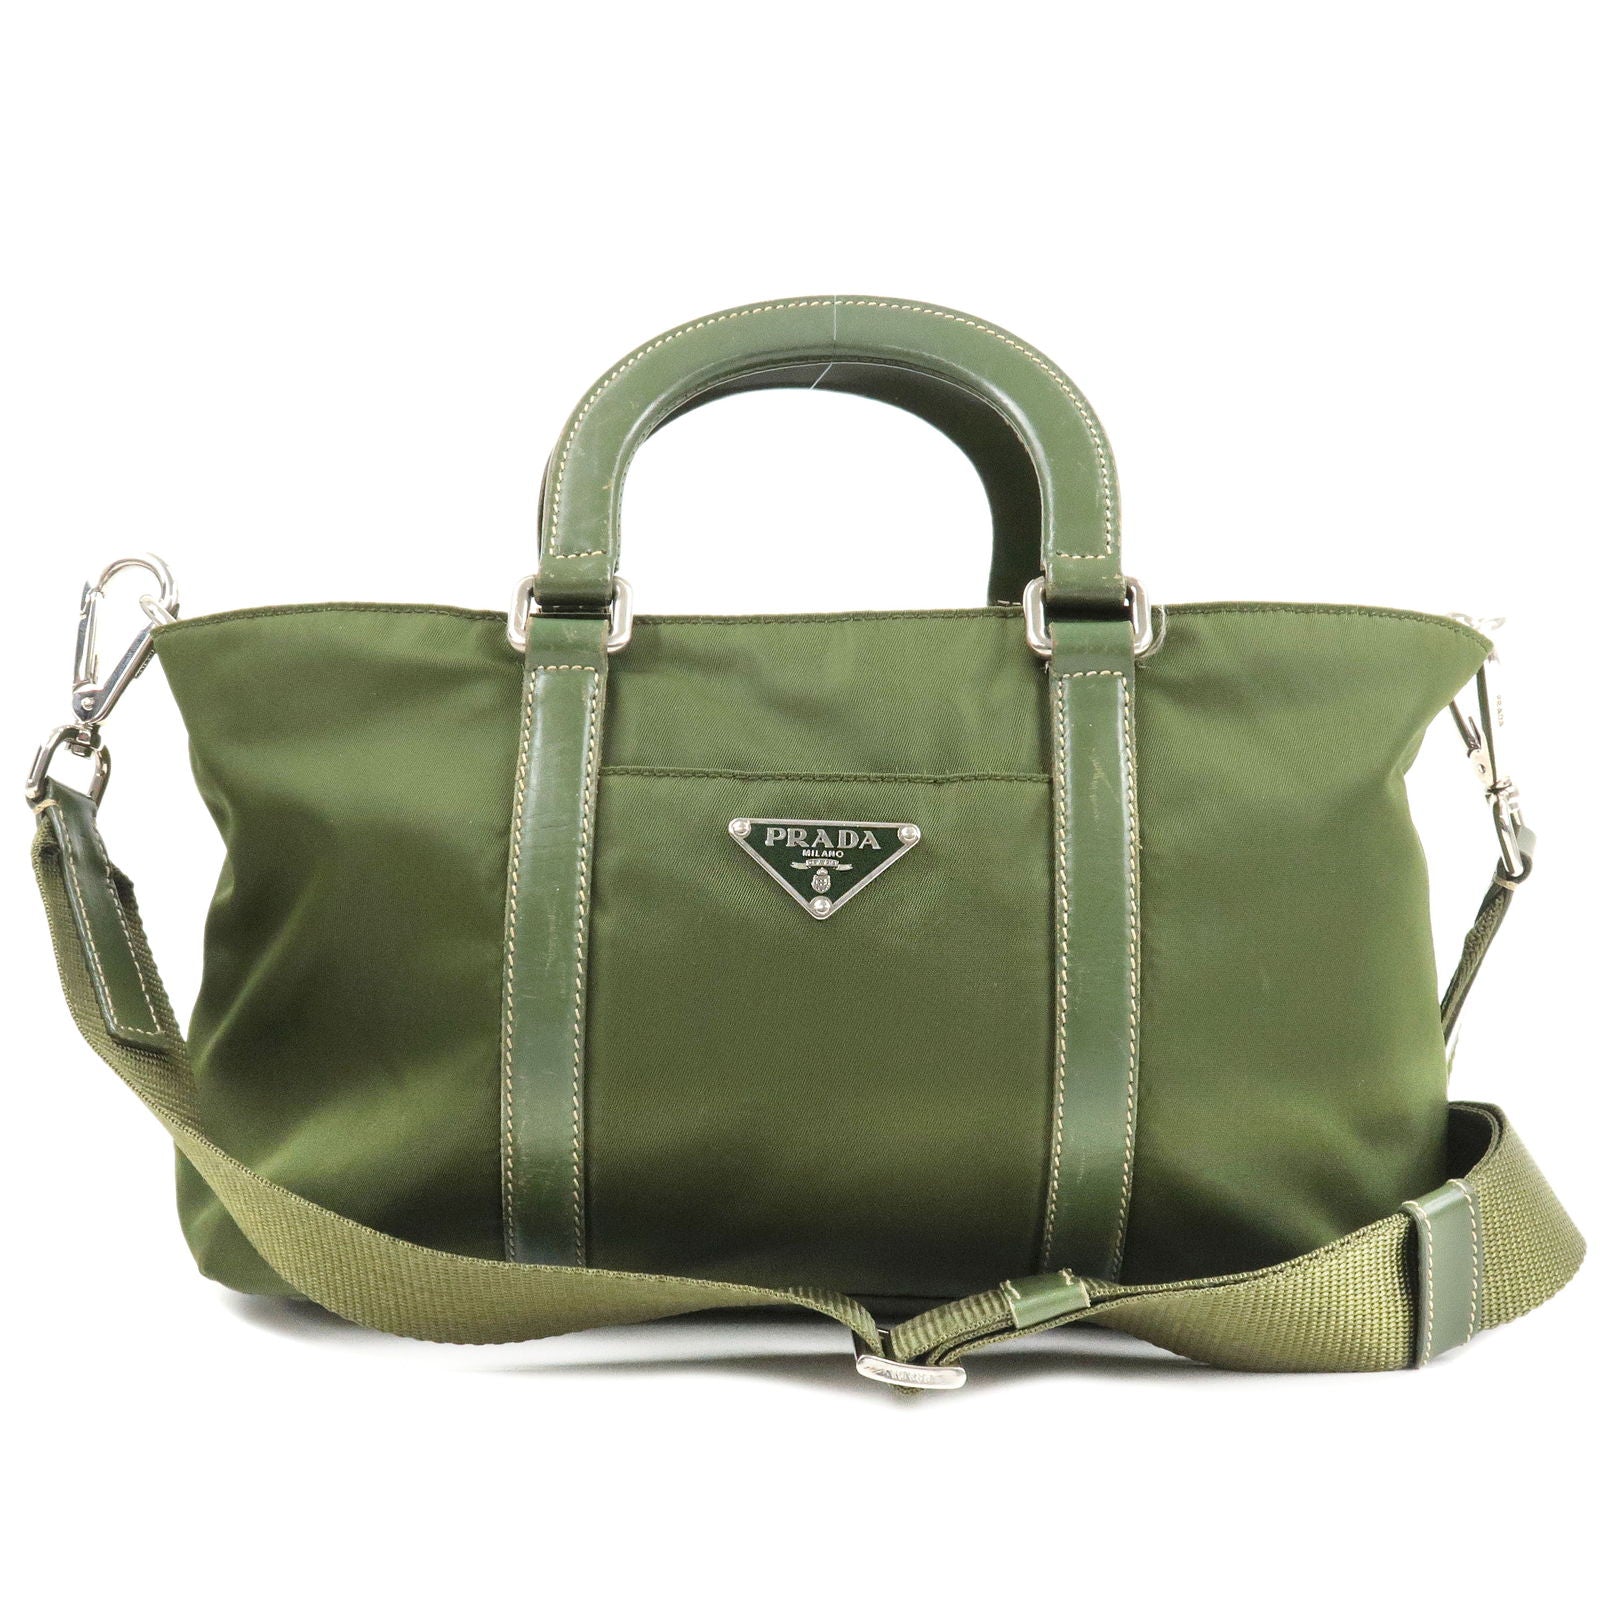 Authentic PRADA Green Nylon Boston Satchel Tote Bag Purse #55611 | eBay